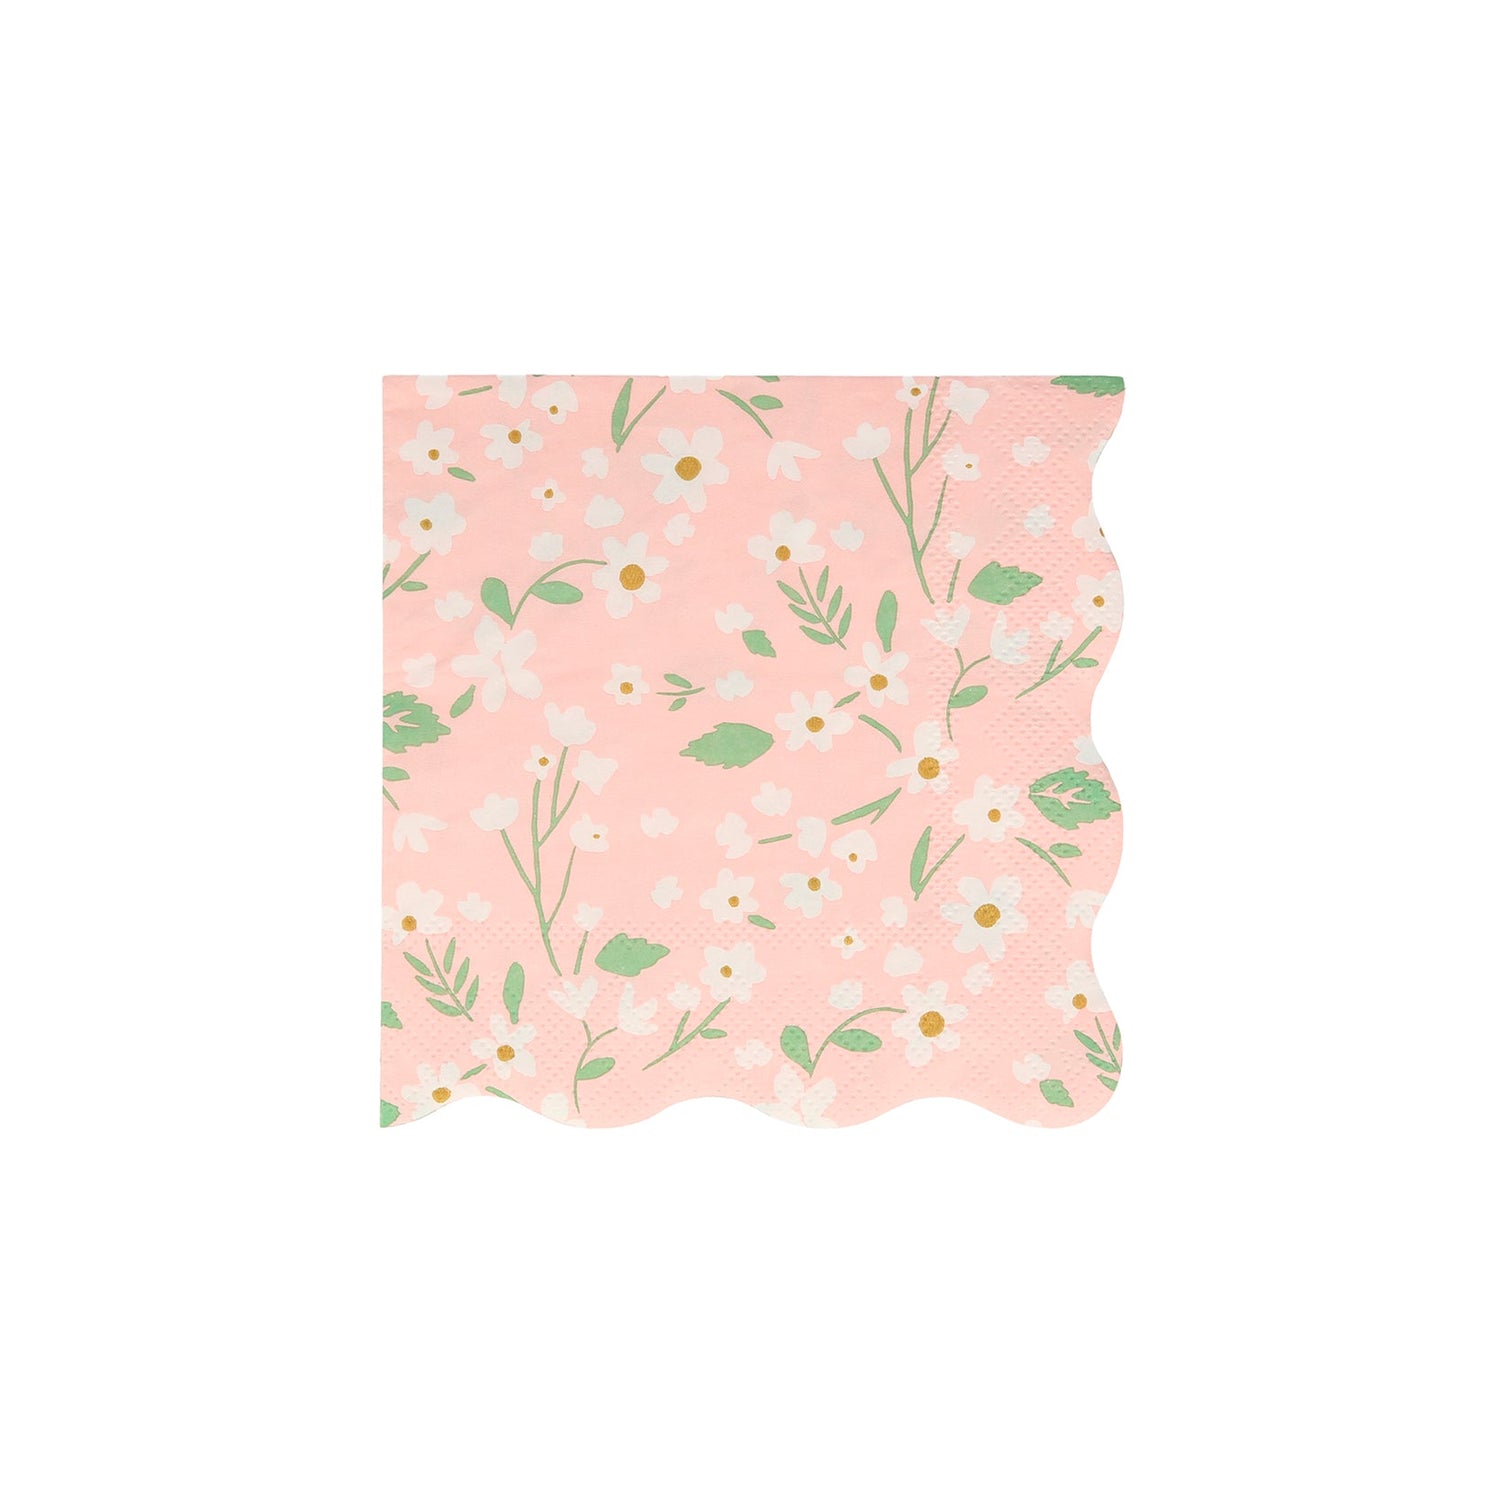 A pink Ditsy Floral Napkin by Meri Meri.